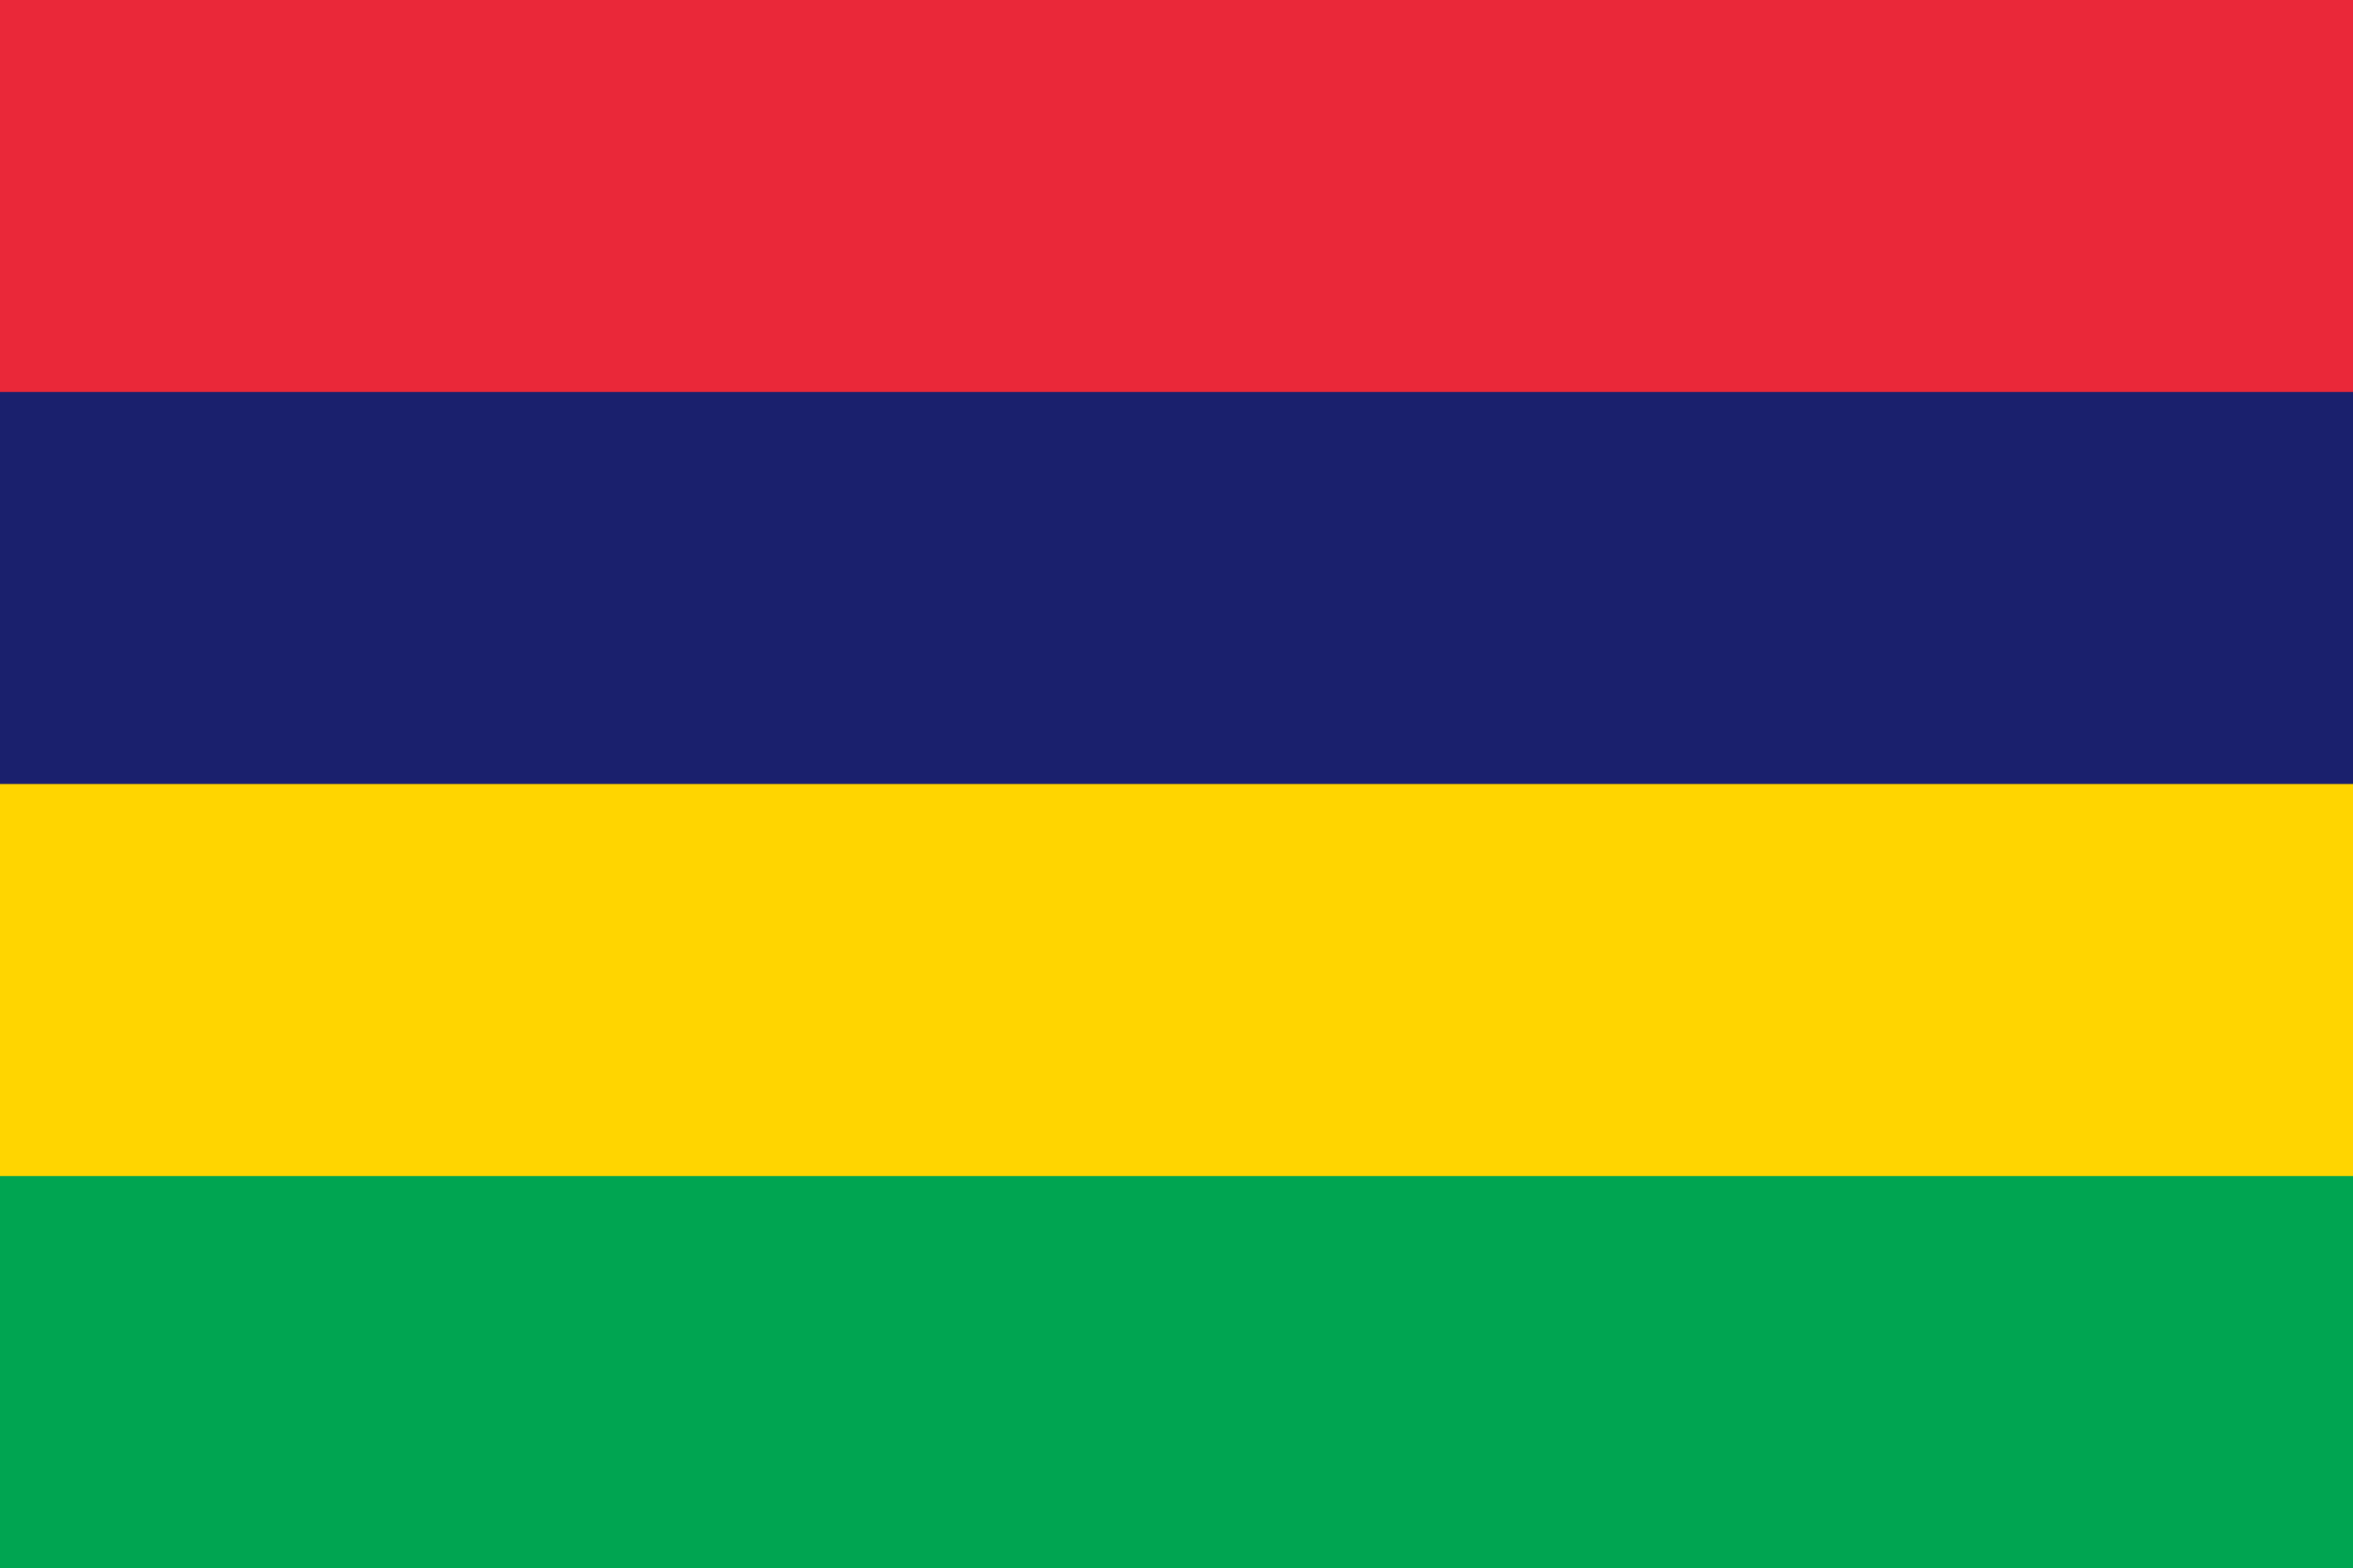 Mauritius Flag Image - Free Download